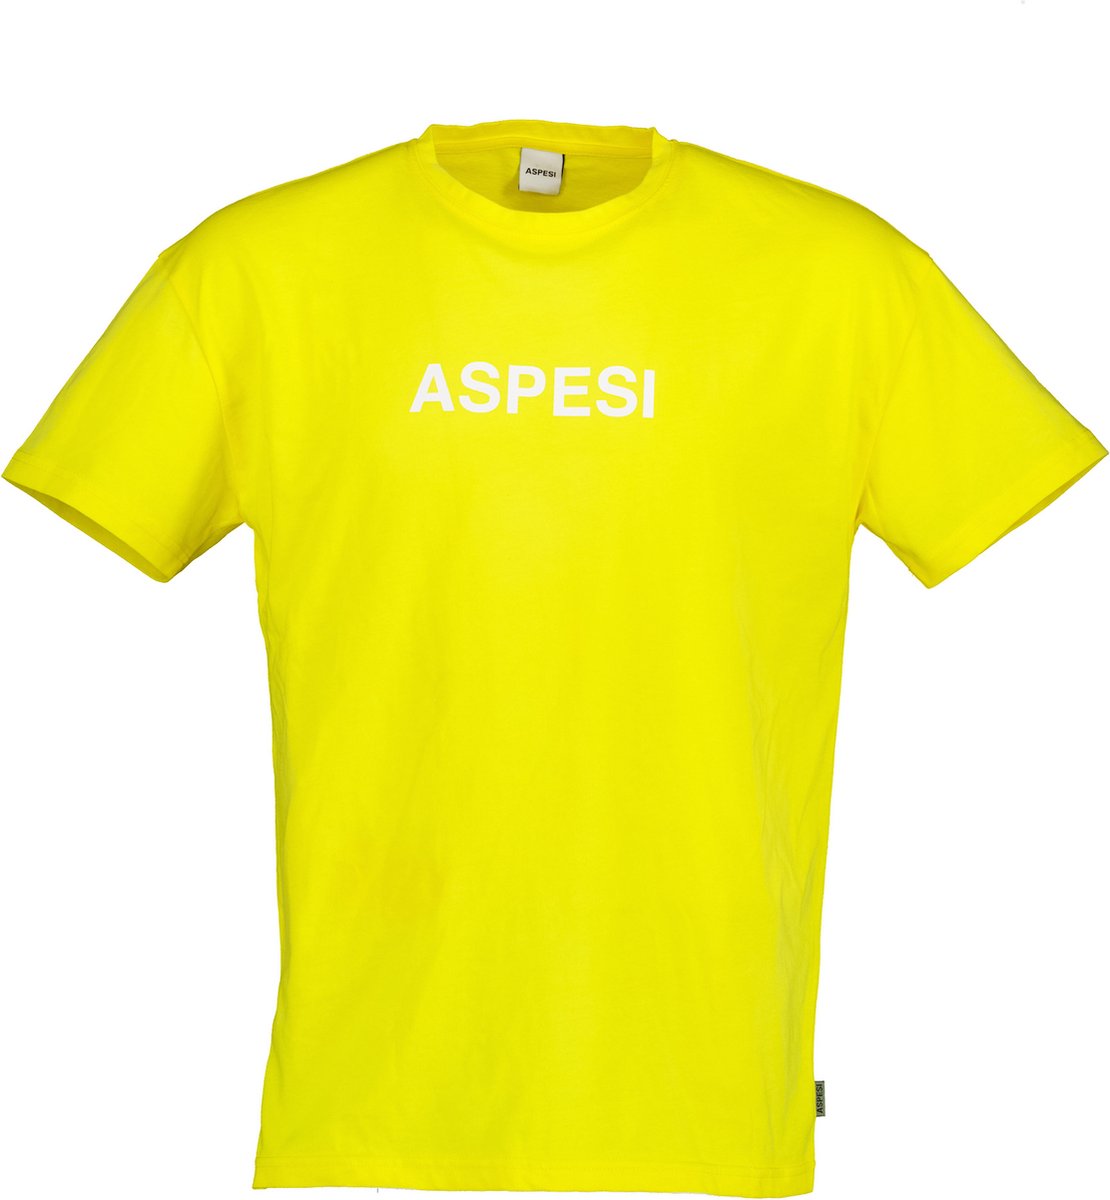 Aspesi Shirt Geel Katoen maat L Basic t-shirts geel